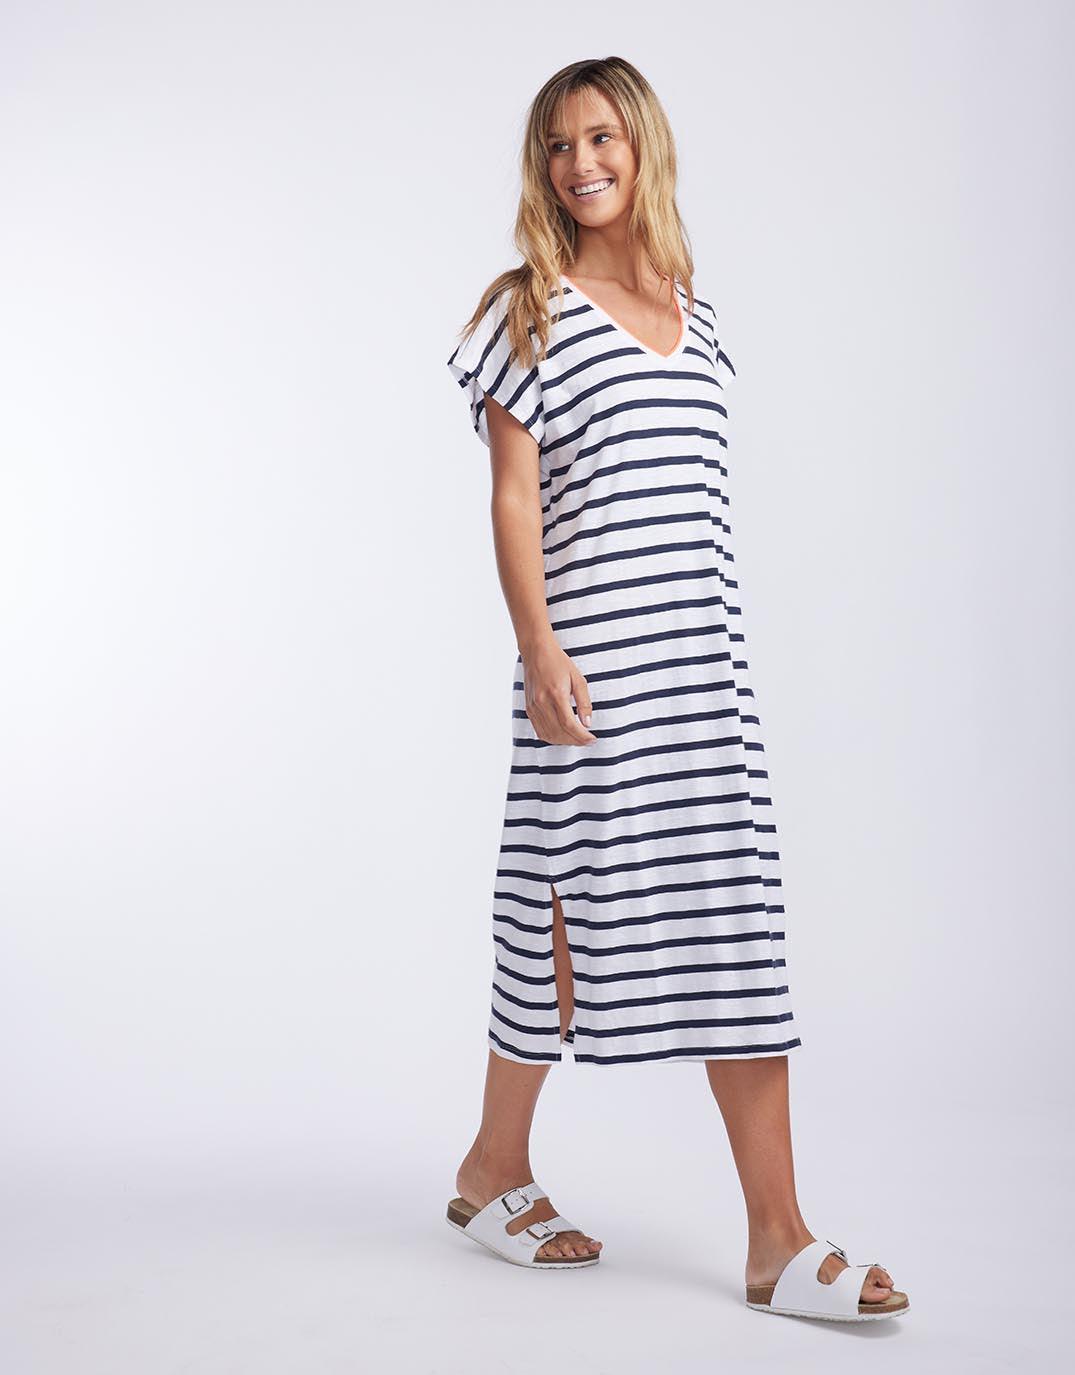 White & Co. - St. Lucia T-Shirt Dress - Navy/White Stripe - White & Co Living Dresses